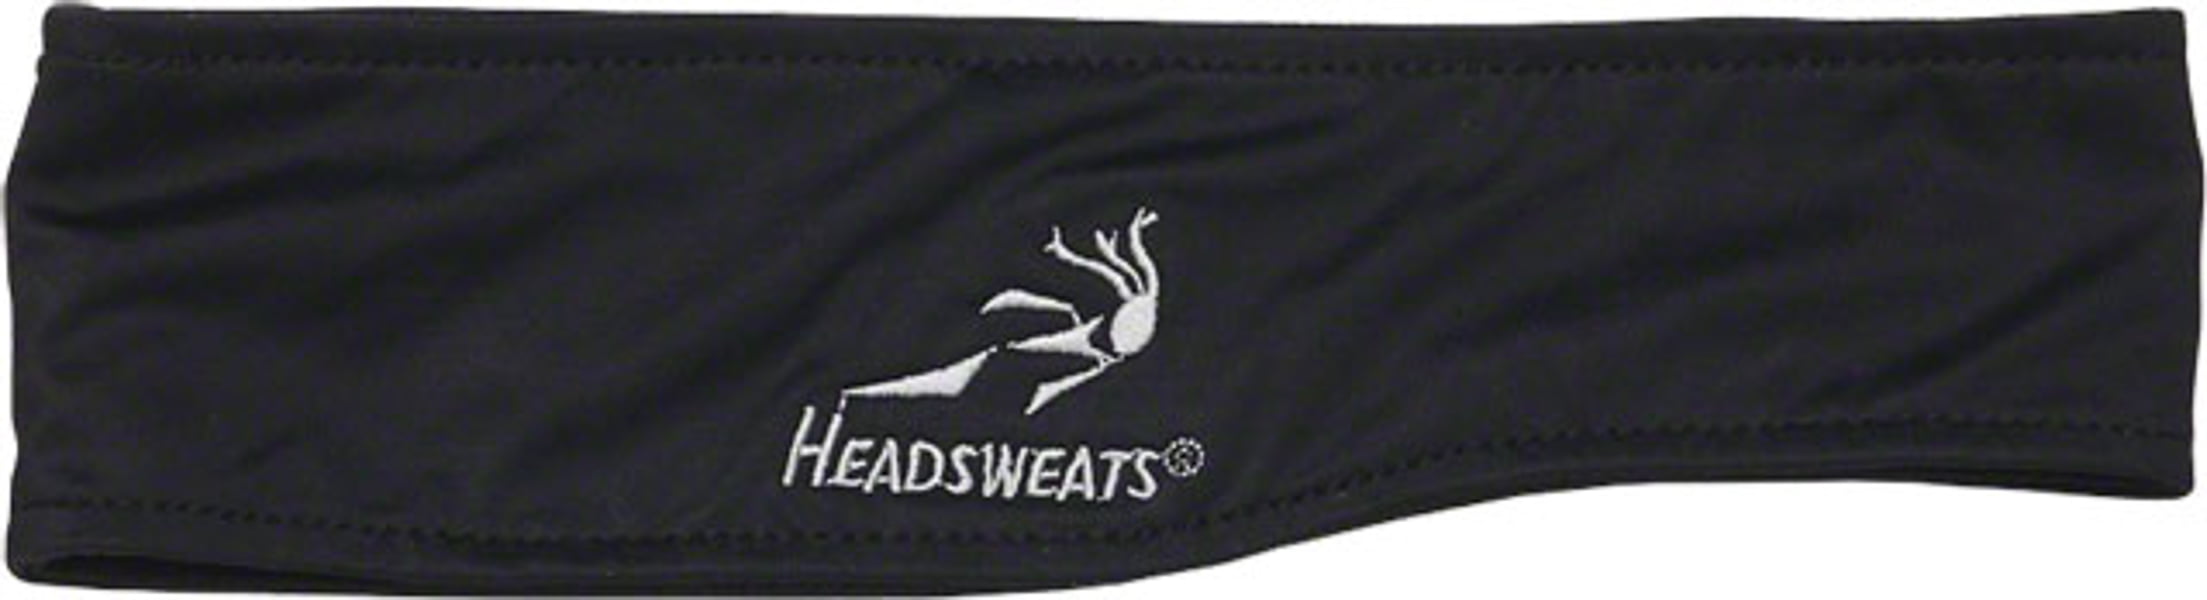 NEW Headsweats Ultra Tech Headband Black